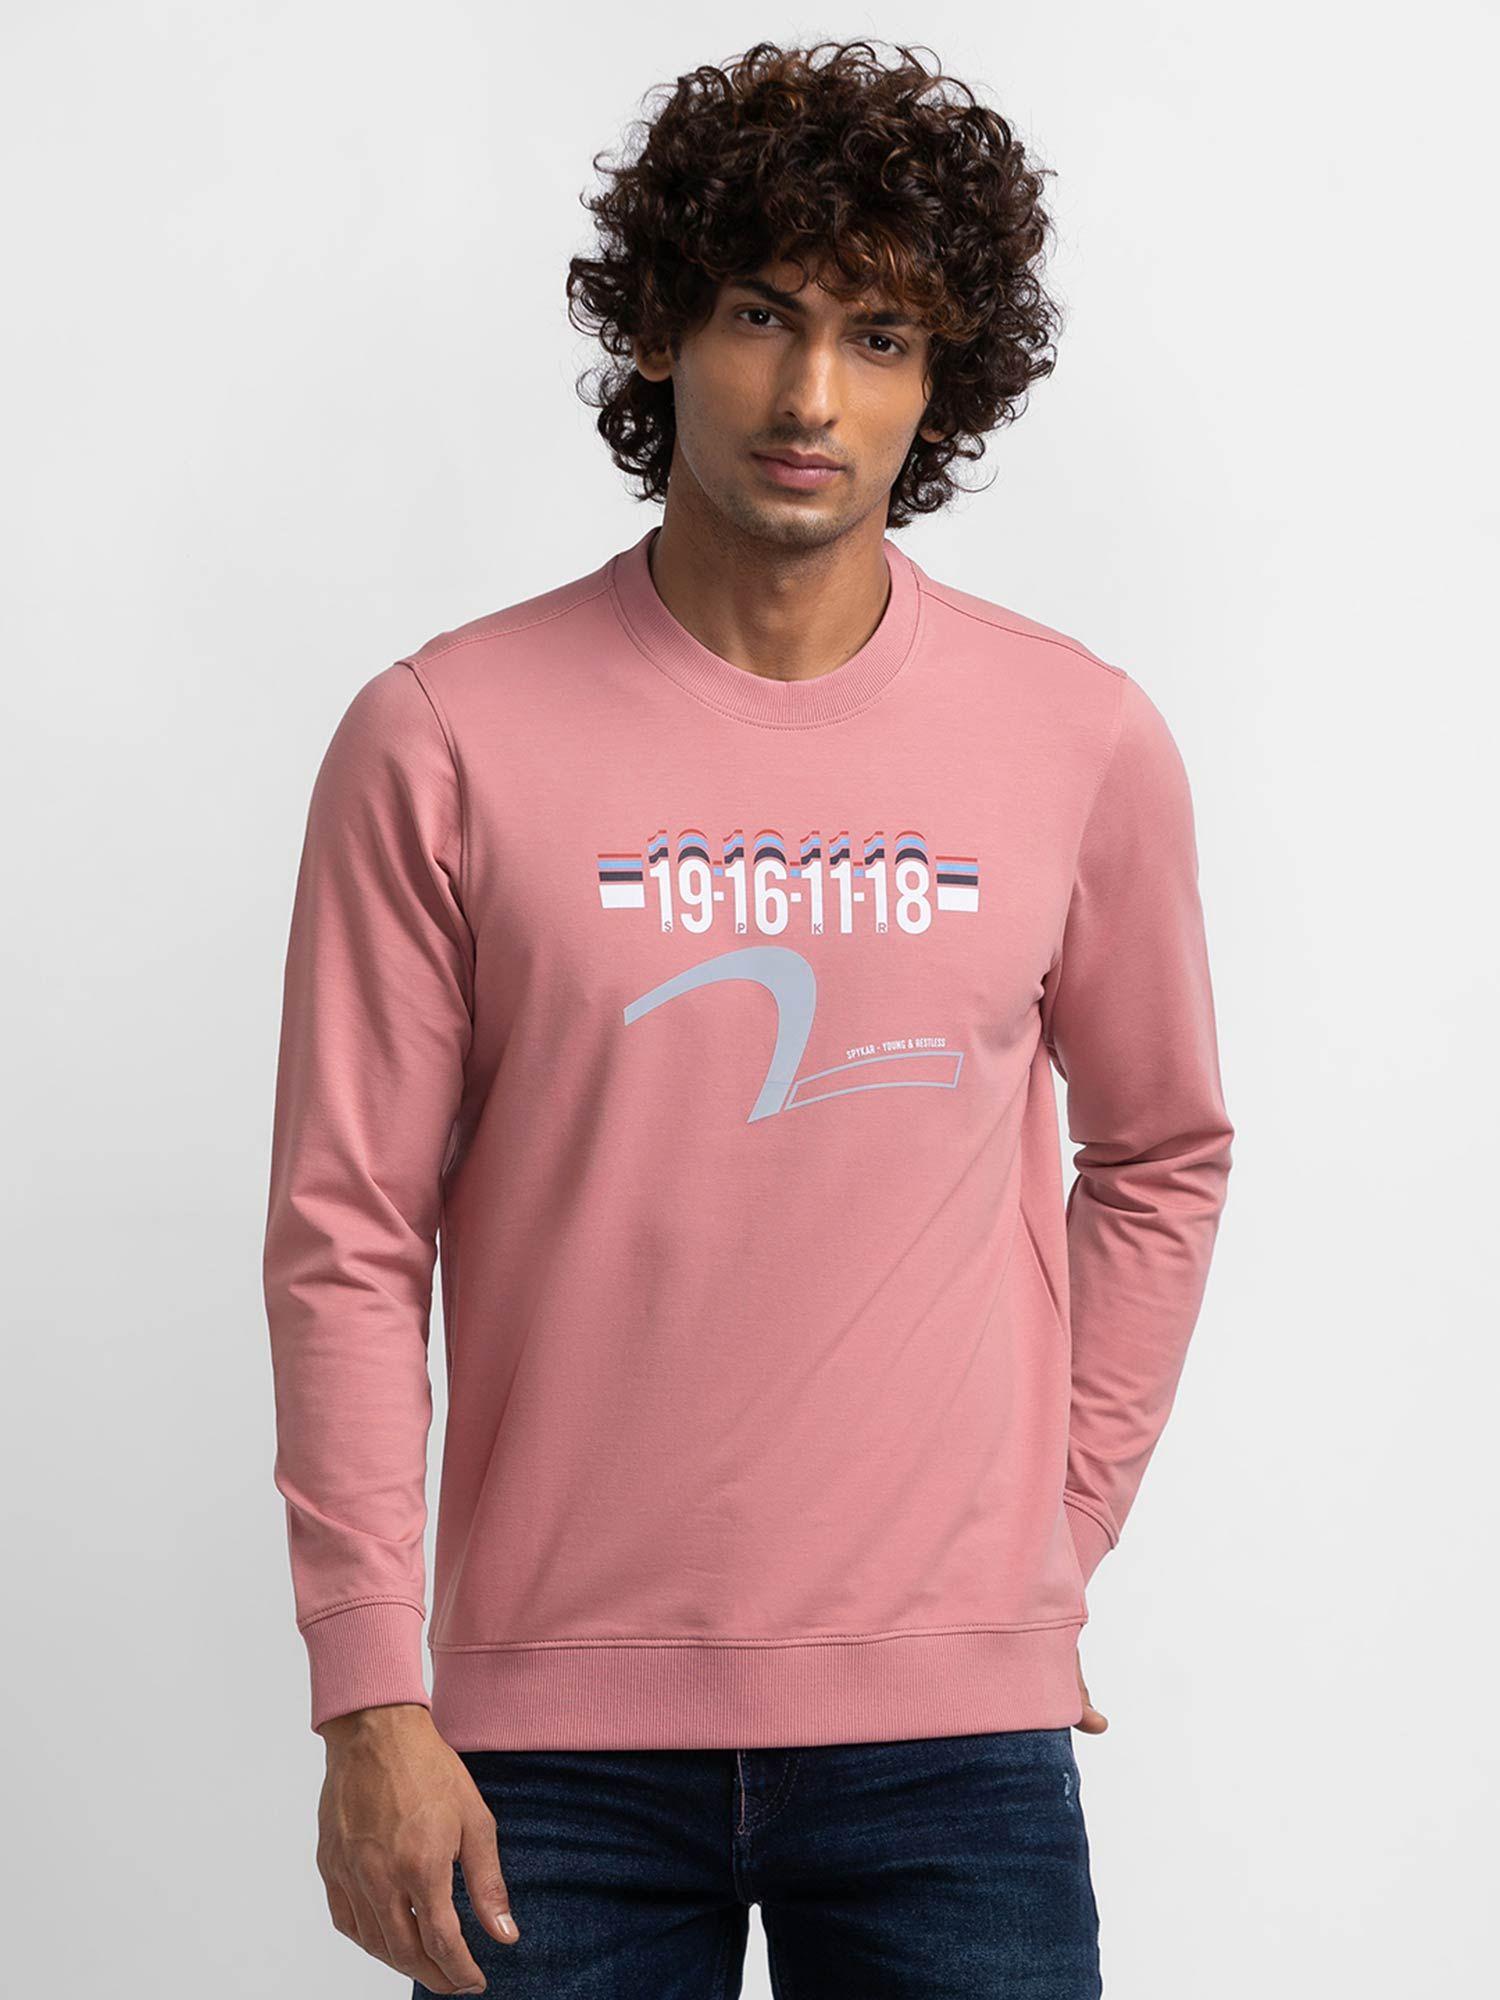 dusty-pink-cotton-full-sleeve-round-neck-sweatshirt-for-men